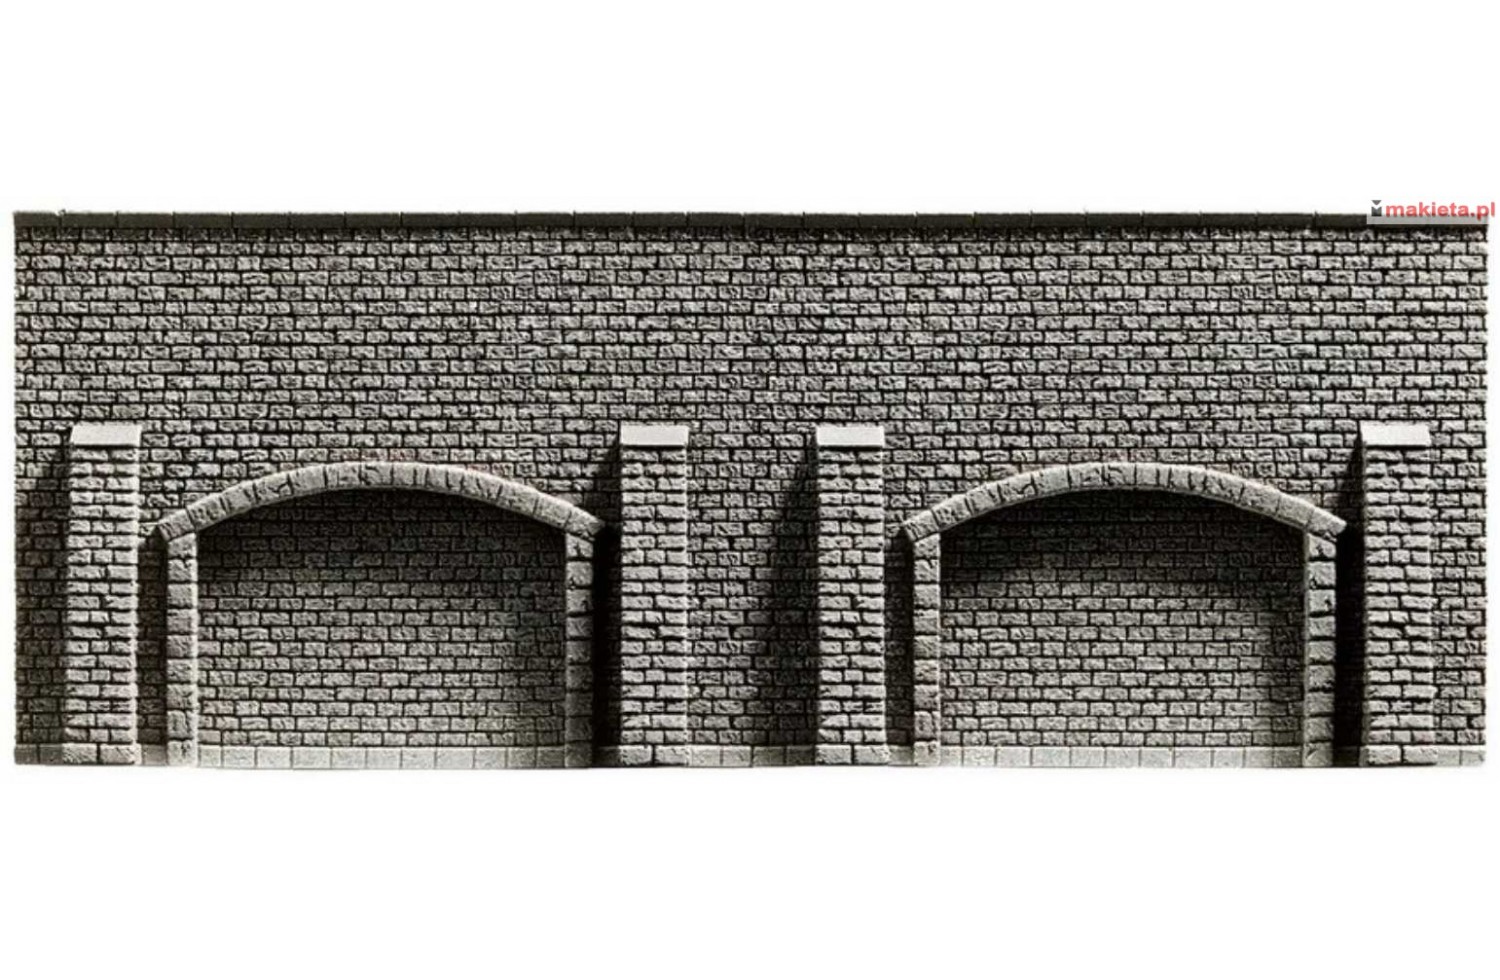 NOCH 58058. Mur oporowy z arkadami, 33,4 x 12,5 cm, skala H0